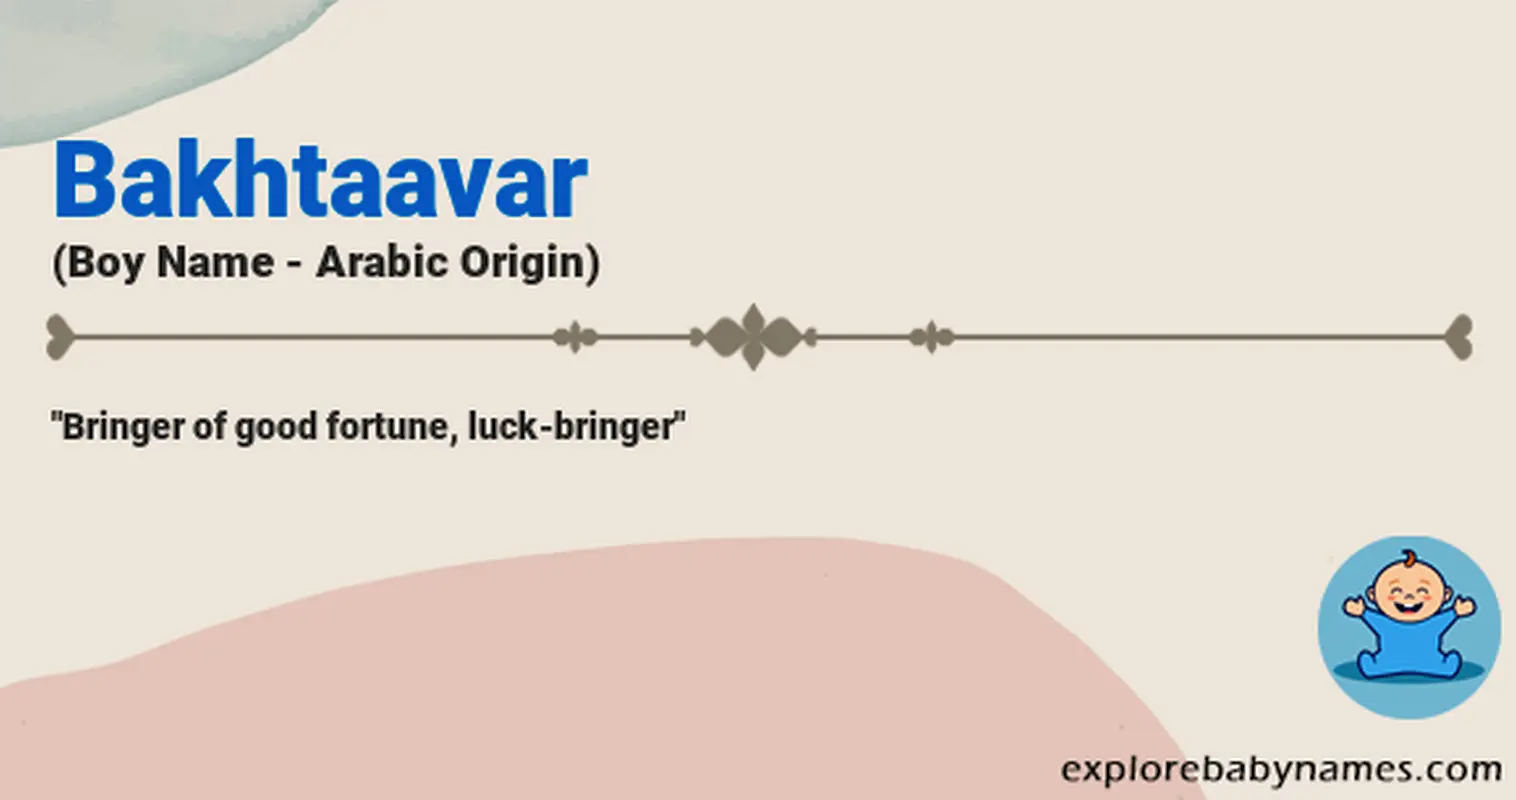 Meaning of Bakhtaavar